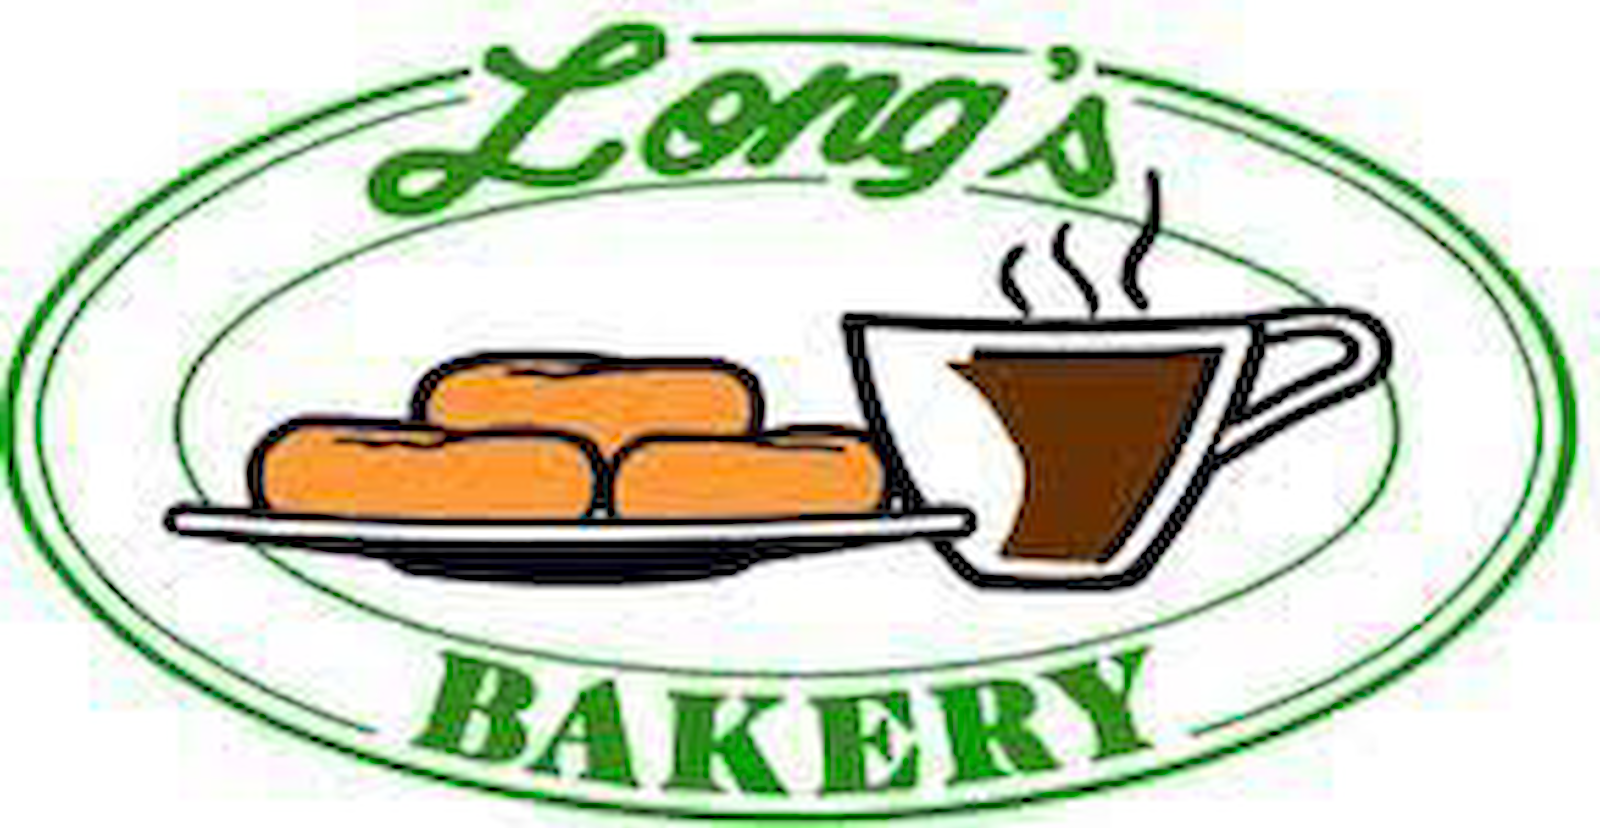 Long's Bakery